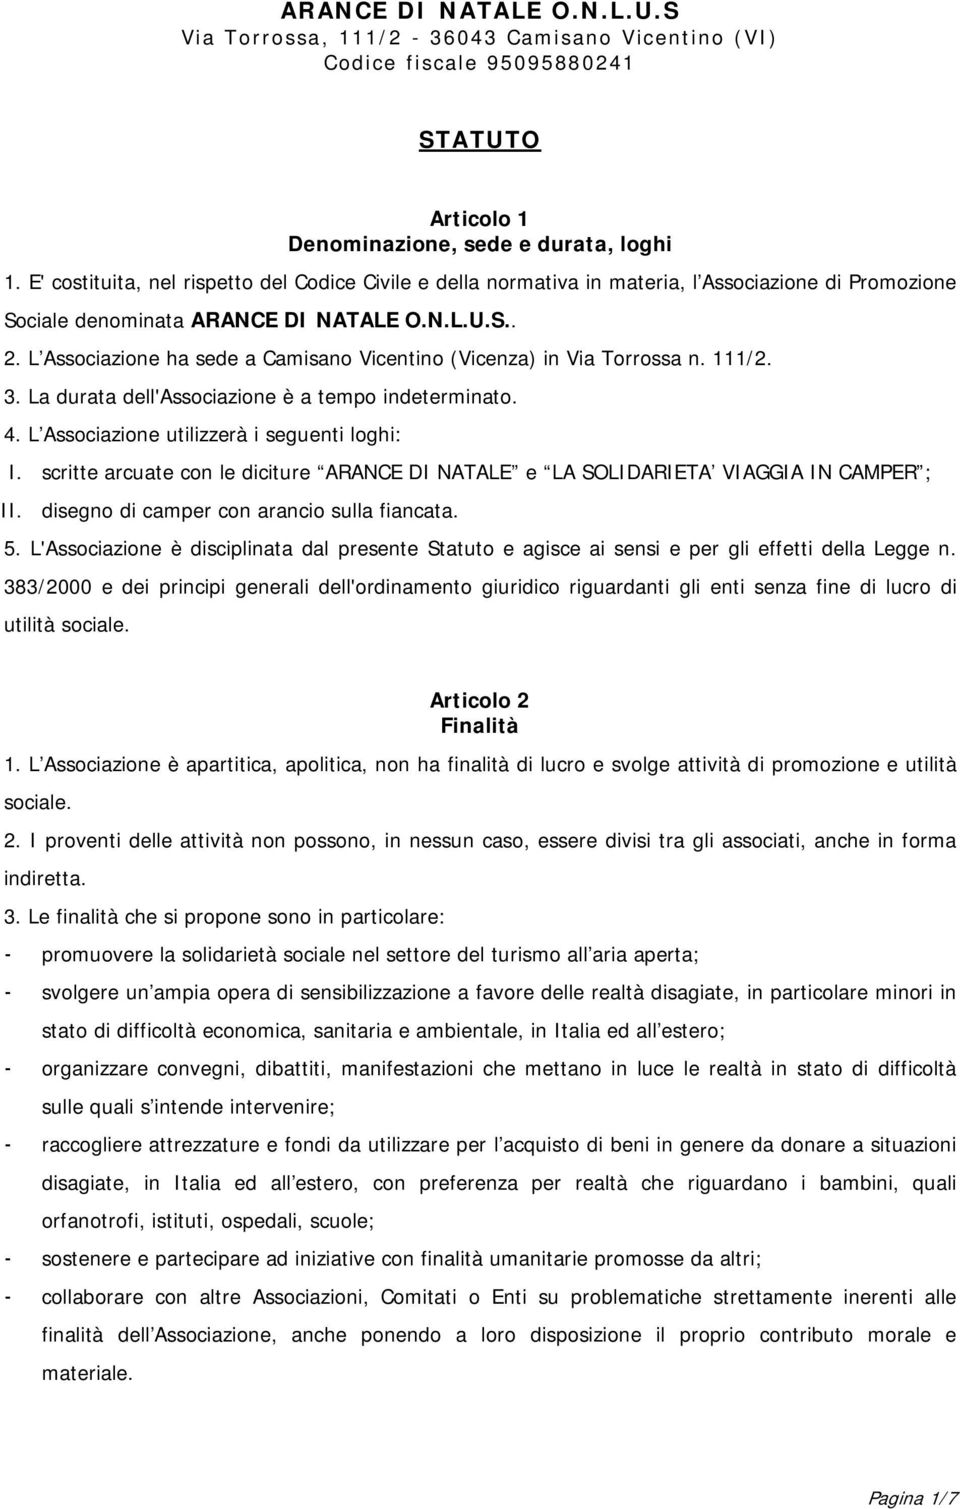 L Associazione ha sede a Camisano Vicentino (Vicenza) in Via Torrossa n. 111/2. 3. La durata dell'associazione è a tempo indeterminato. 4. L Associazione utilizzerà i seguenti loghi: I.